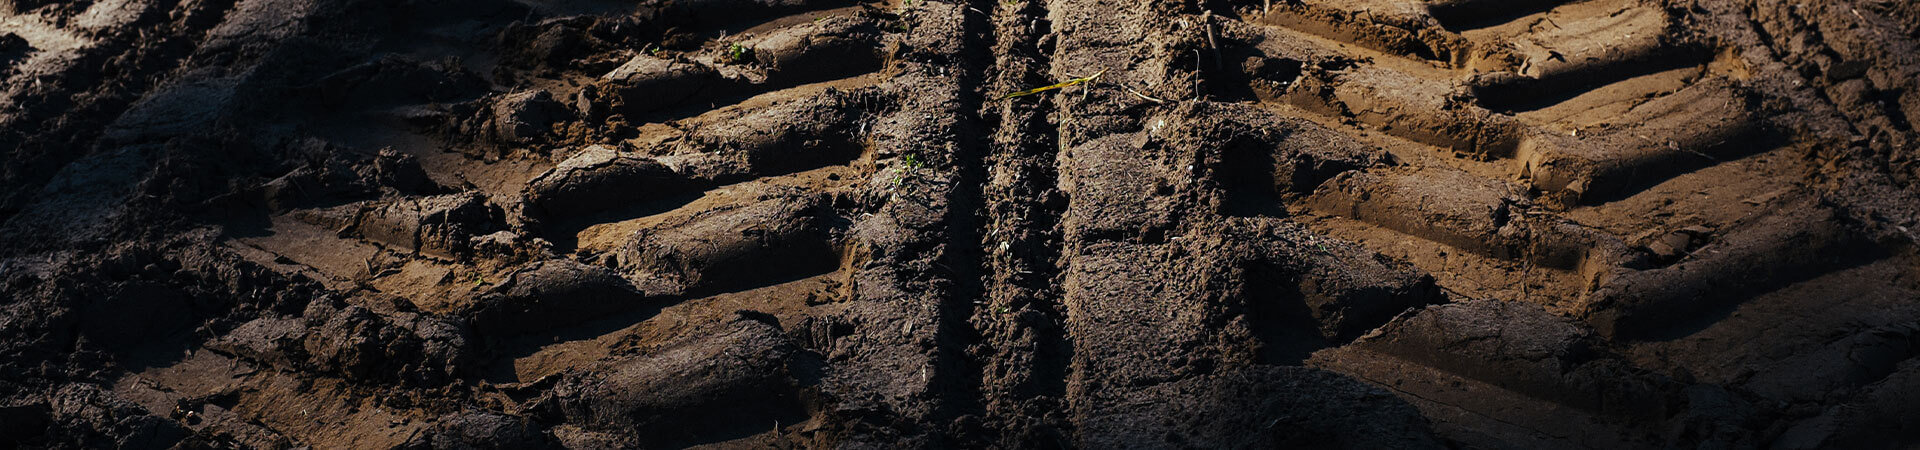 Tire tracks in a muddy field.